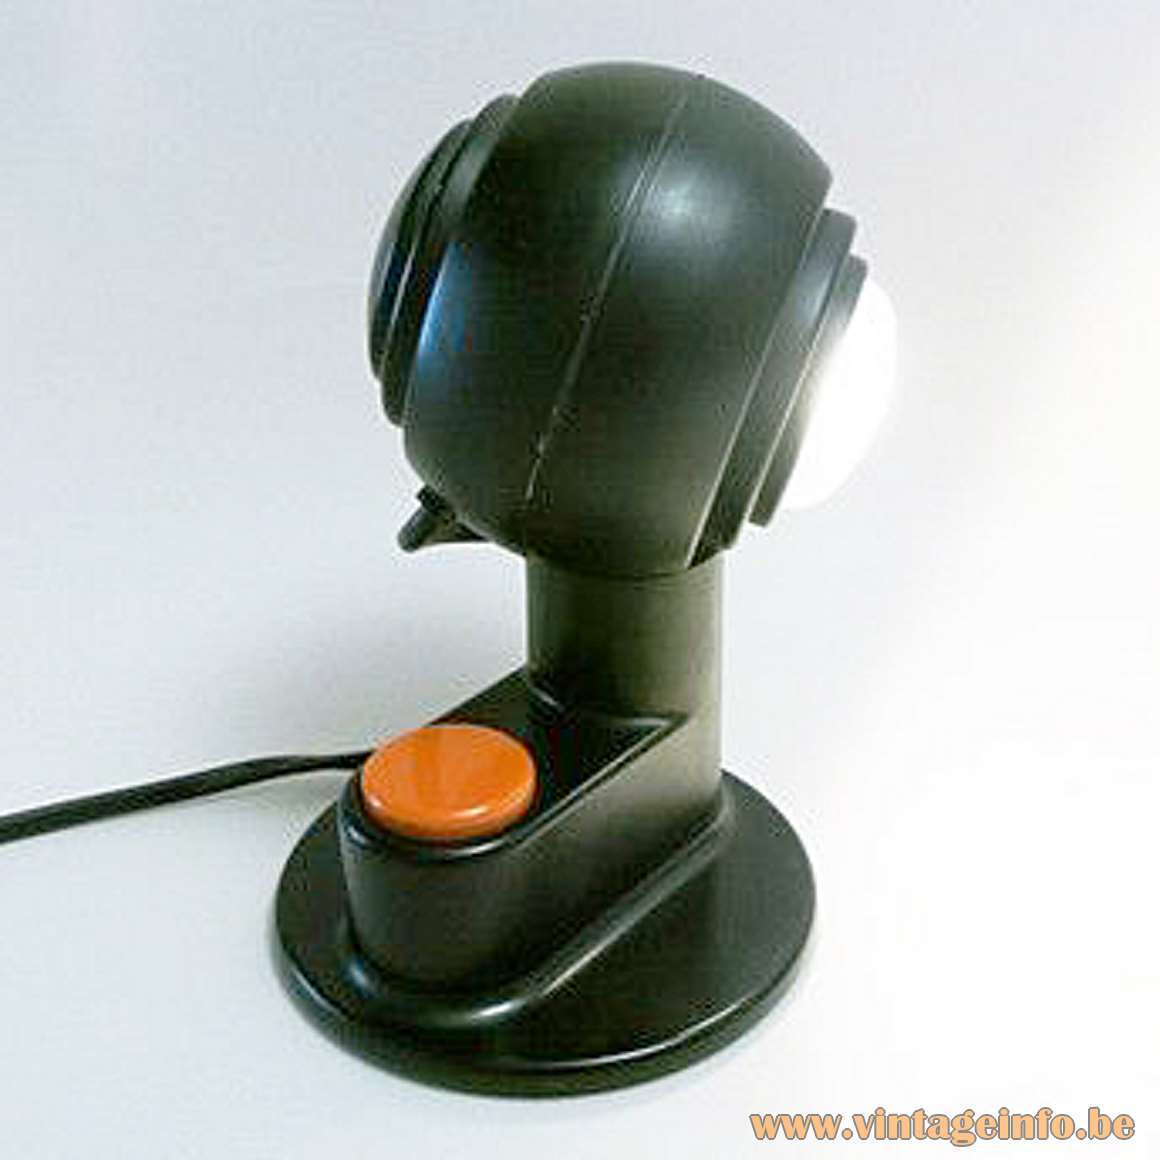 Osram Concentra Agilo Table Lamp black plastic magnetic globe orange round switch Schlagheck Schultes Design 1977